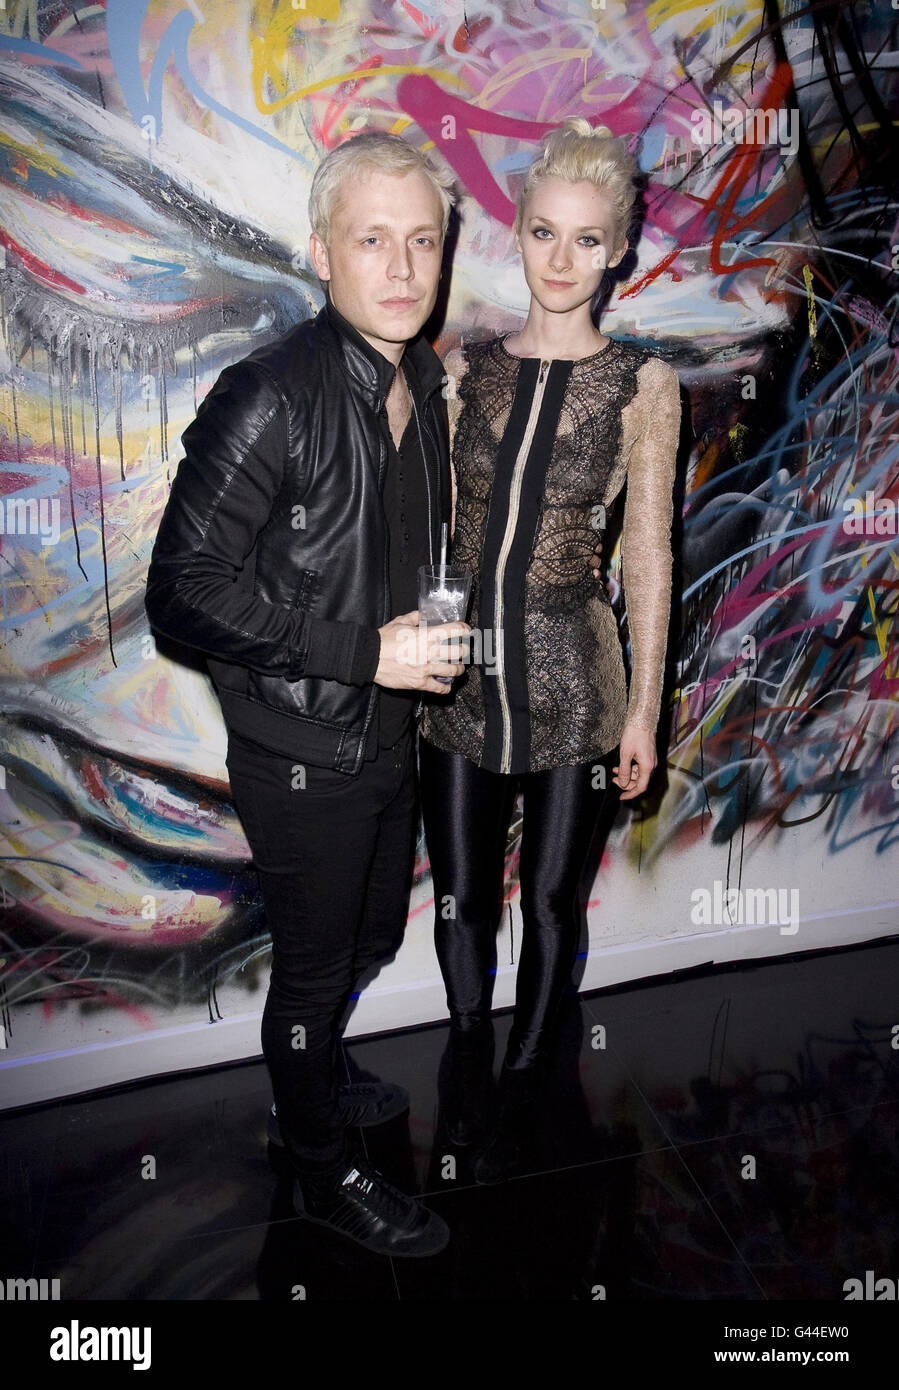 El Sr. Hudson (izquierda) y Portia Freeman asisten a la Sony Music & Next Model Management London Fashion Week Closing Party, Exile, Millbank Tower, Millbank London. Foto de stock